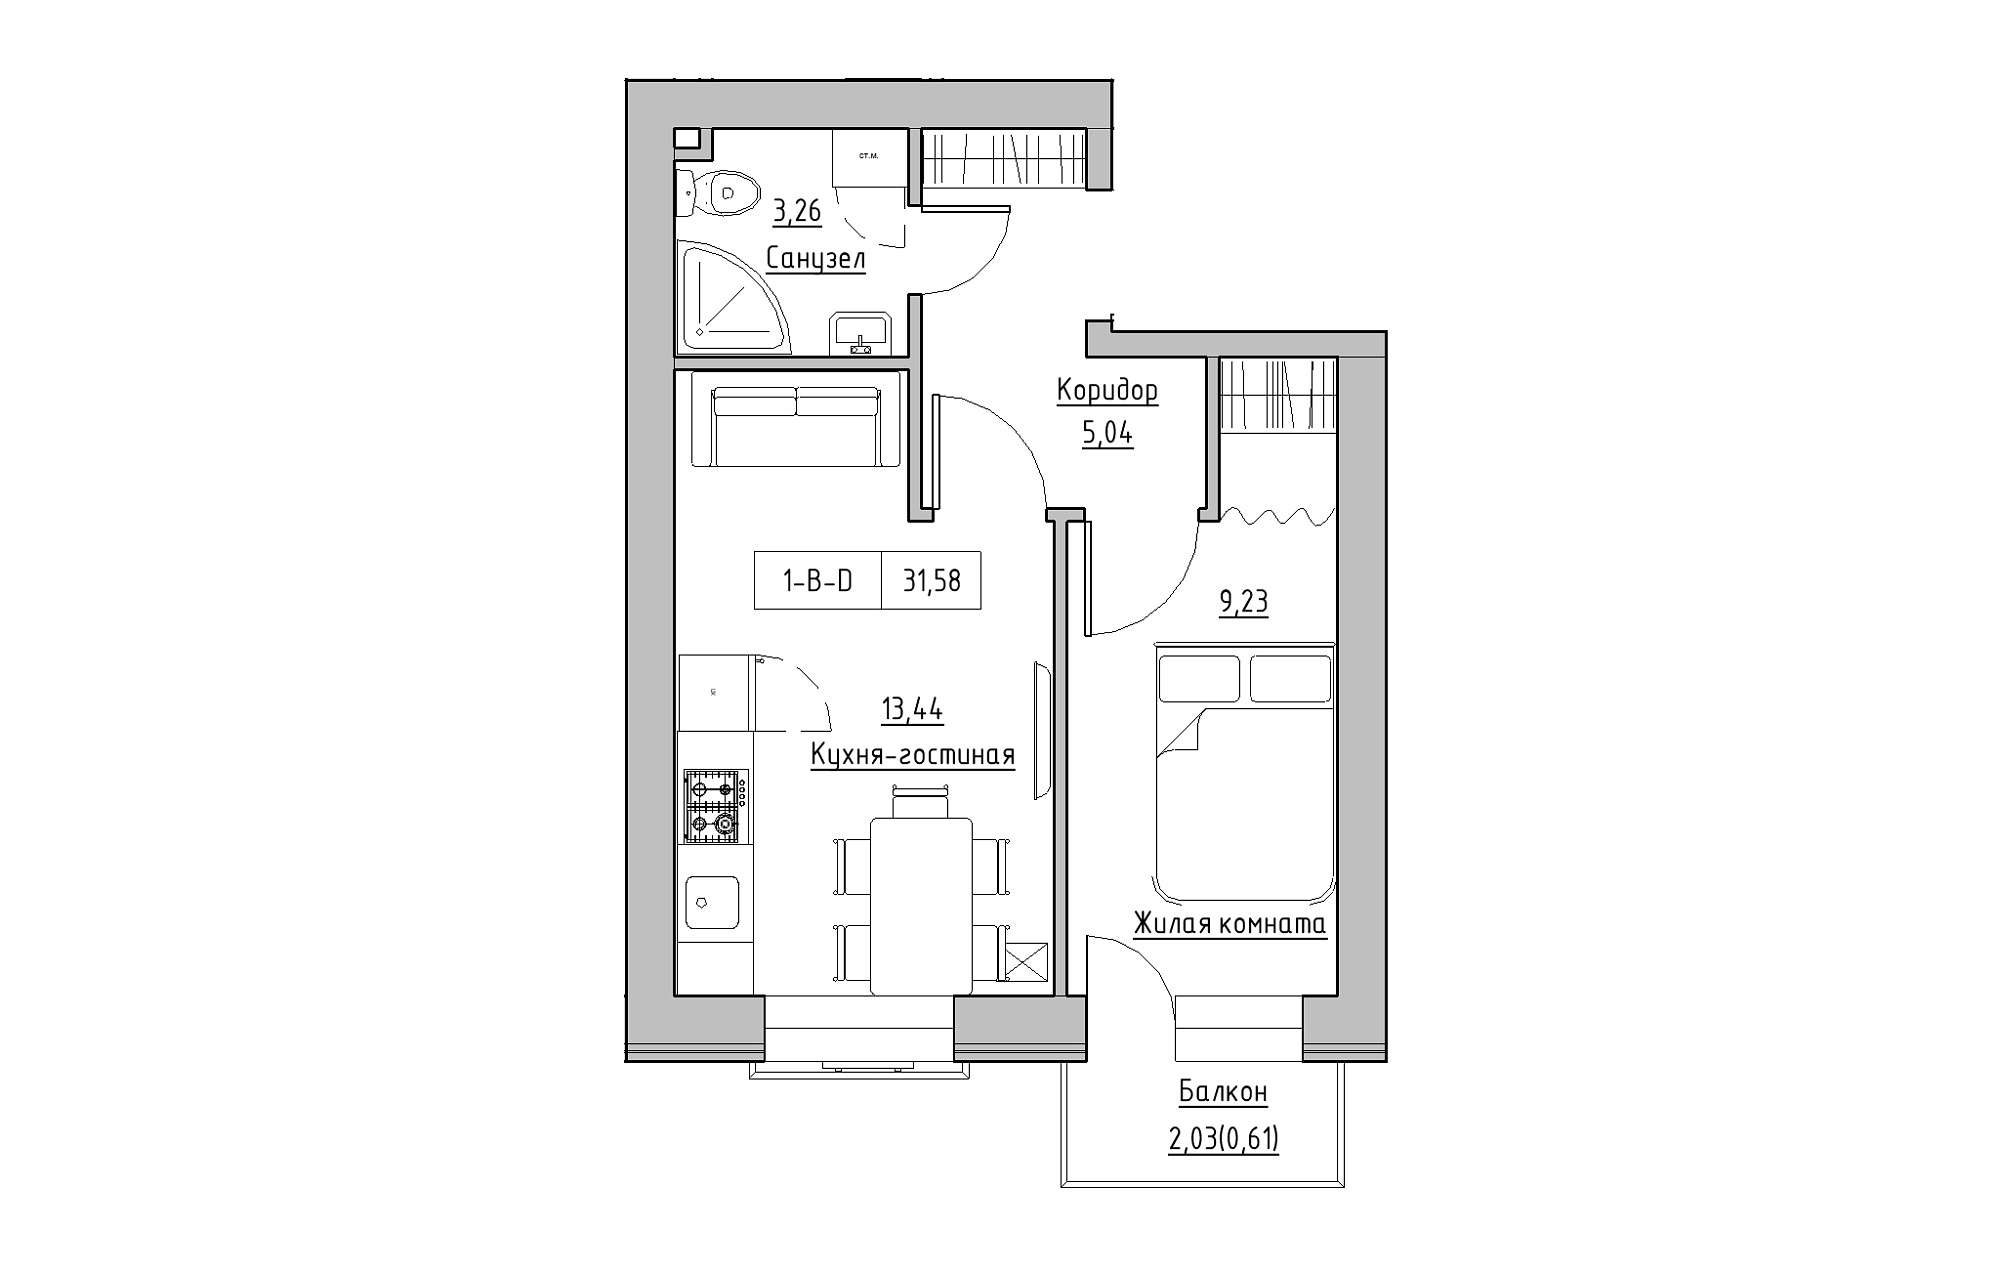 Planning 1-rm flats area 31.58m2, KS-018-04/0003.